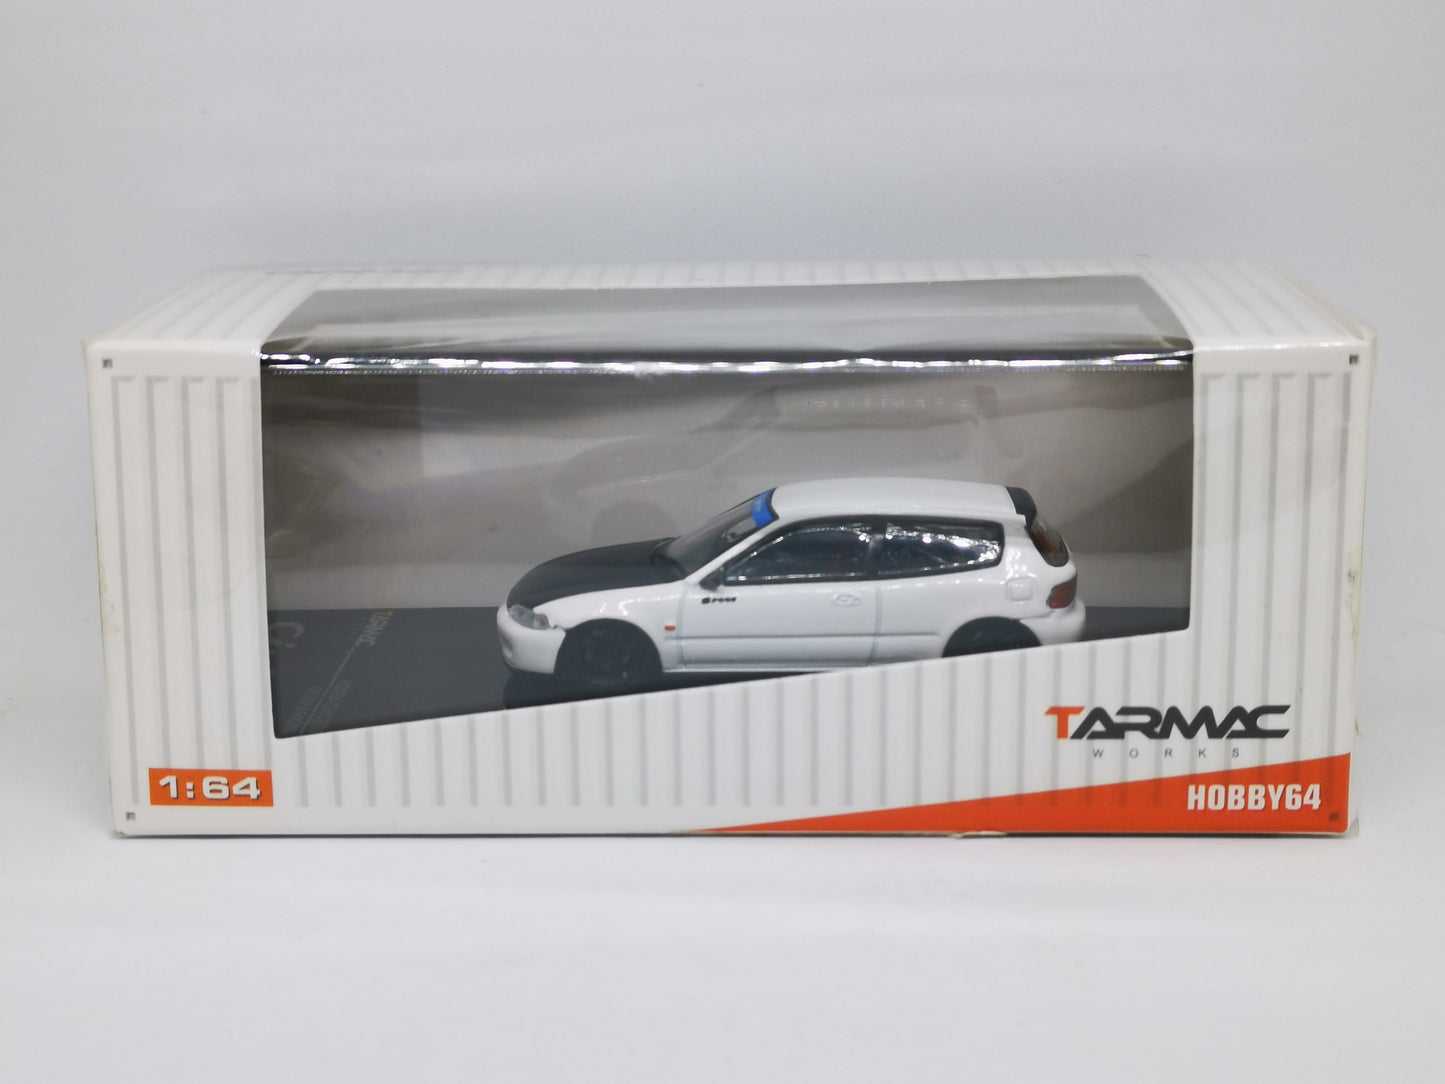 Tarmac Works Honda Civic Eg6 Gr.A Racing Spoon Racing White 1:64 Scale